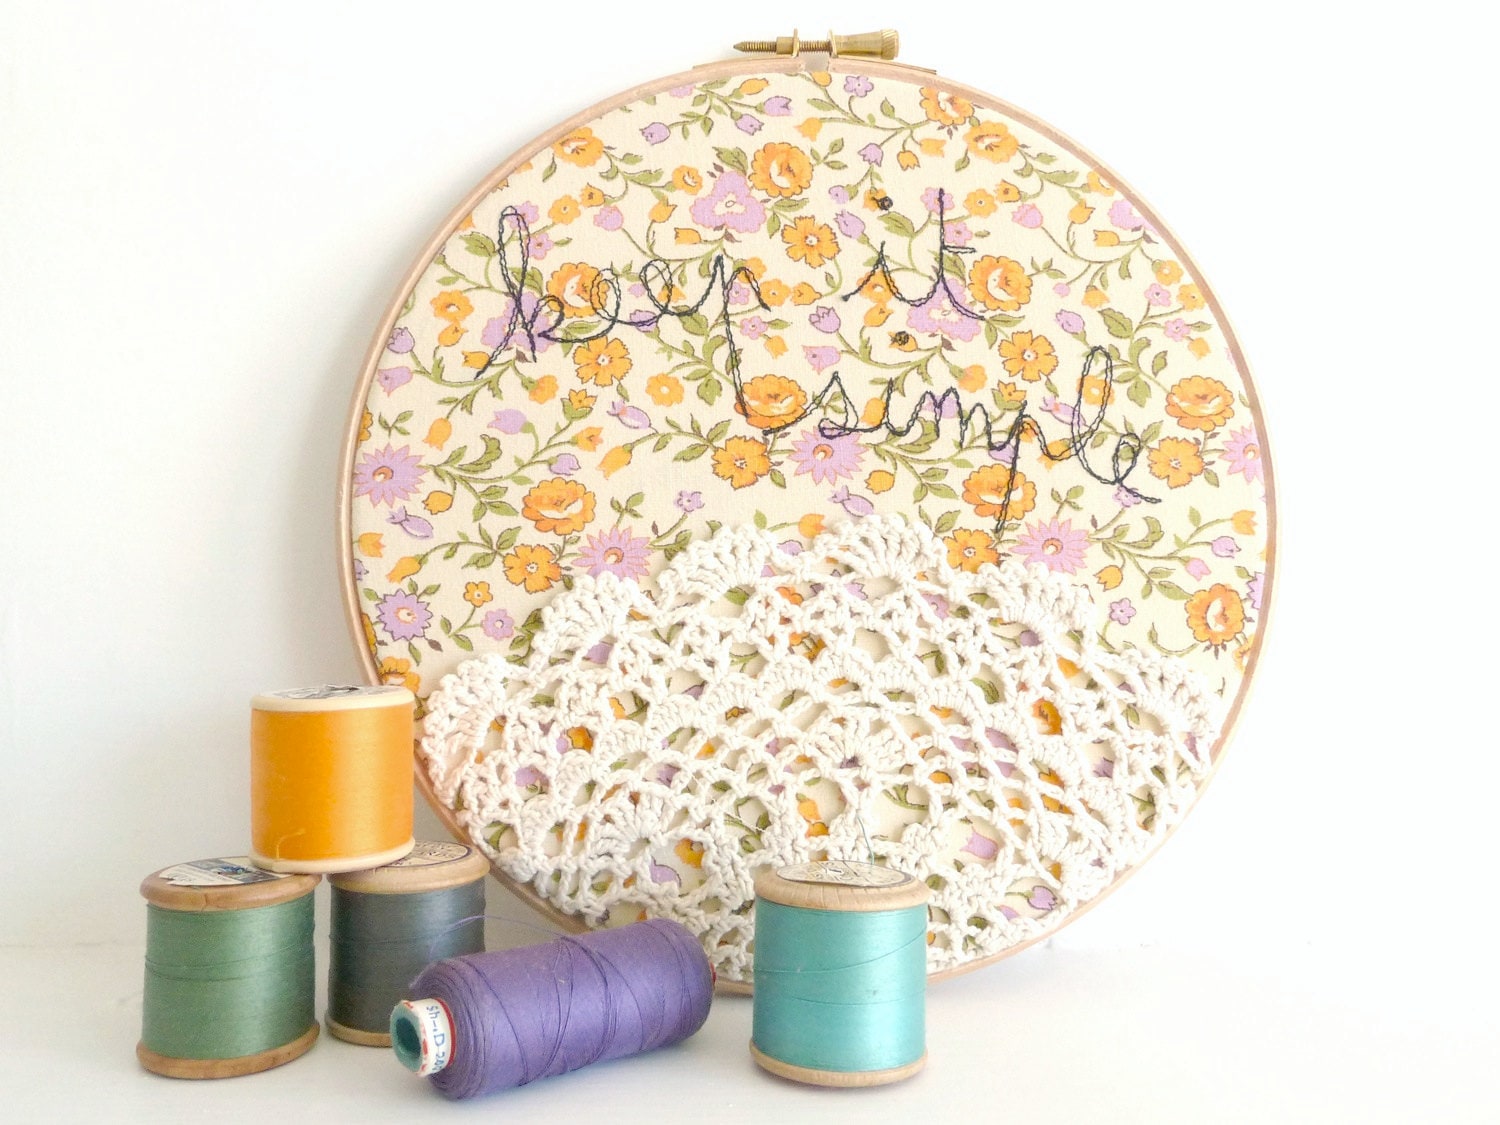 Doily Wall Art Embroidery Hoop 'Keep it simple' by ThreeRedApples